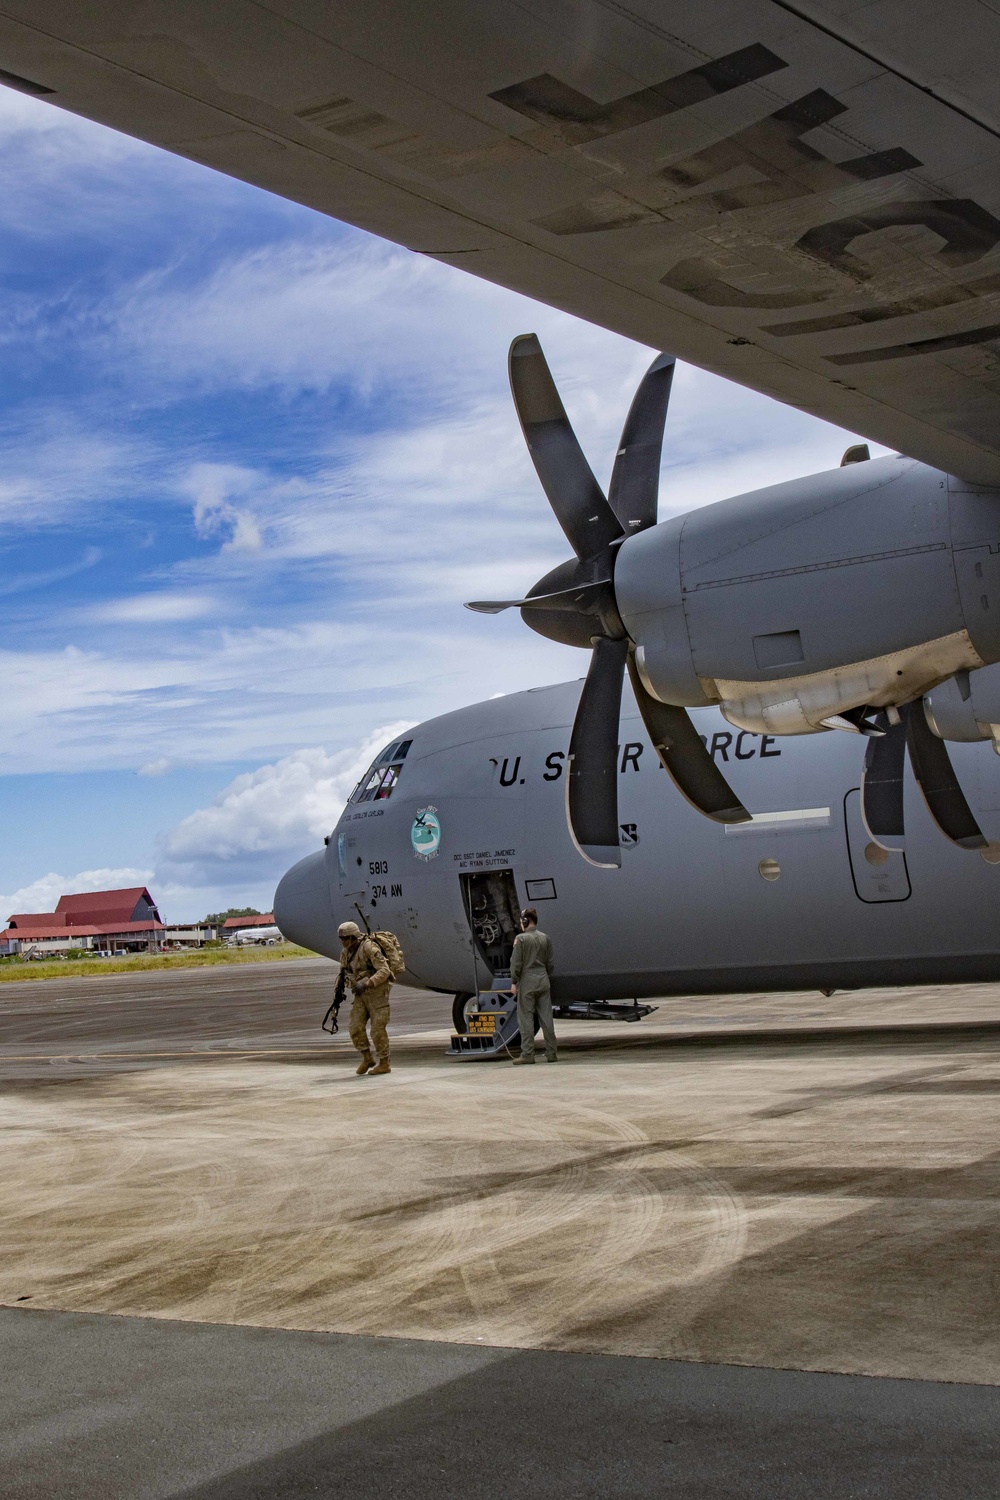 Exercise Palau 2019 Marks Largest U.S. Army Presence on Palau In Three Decades